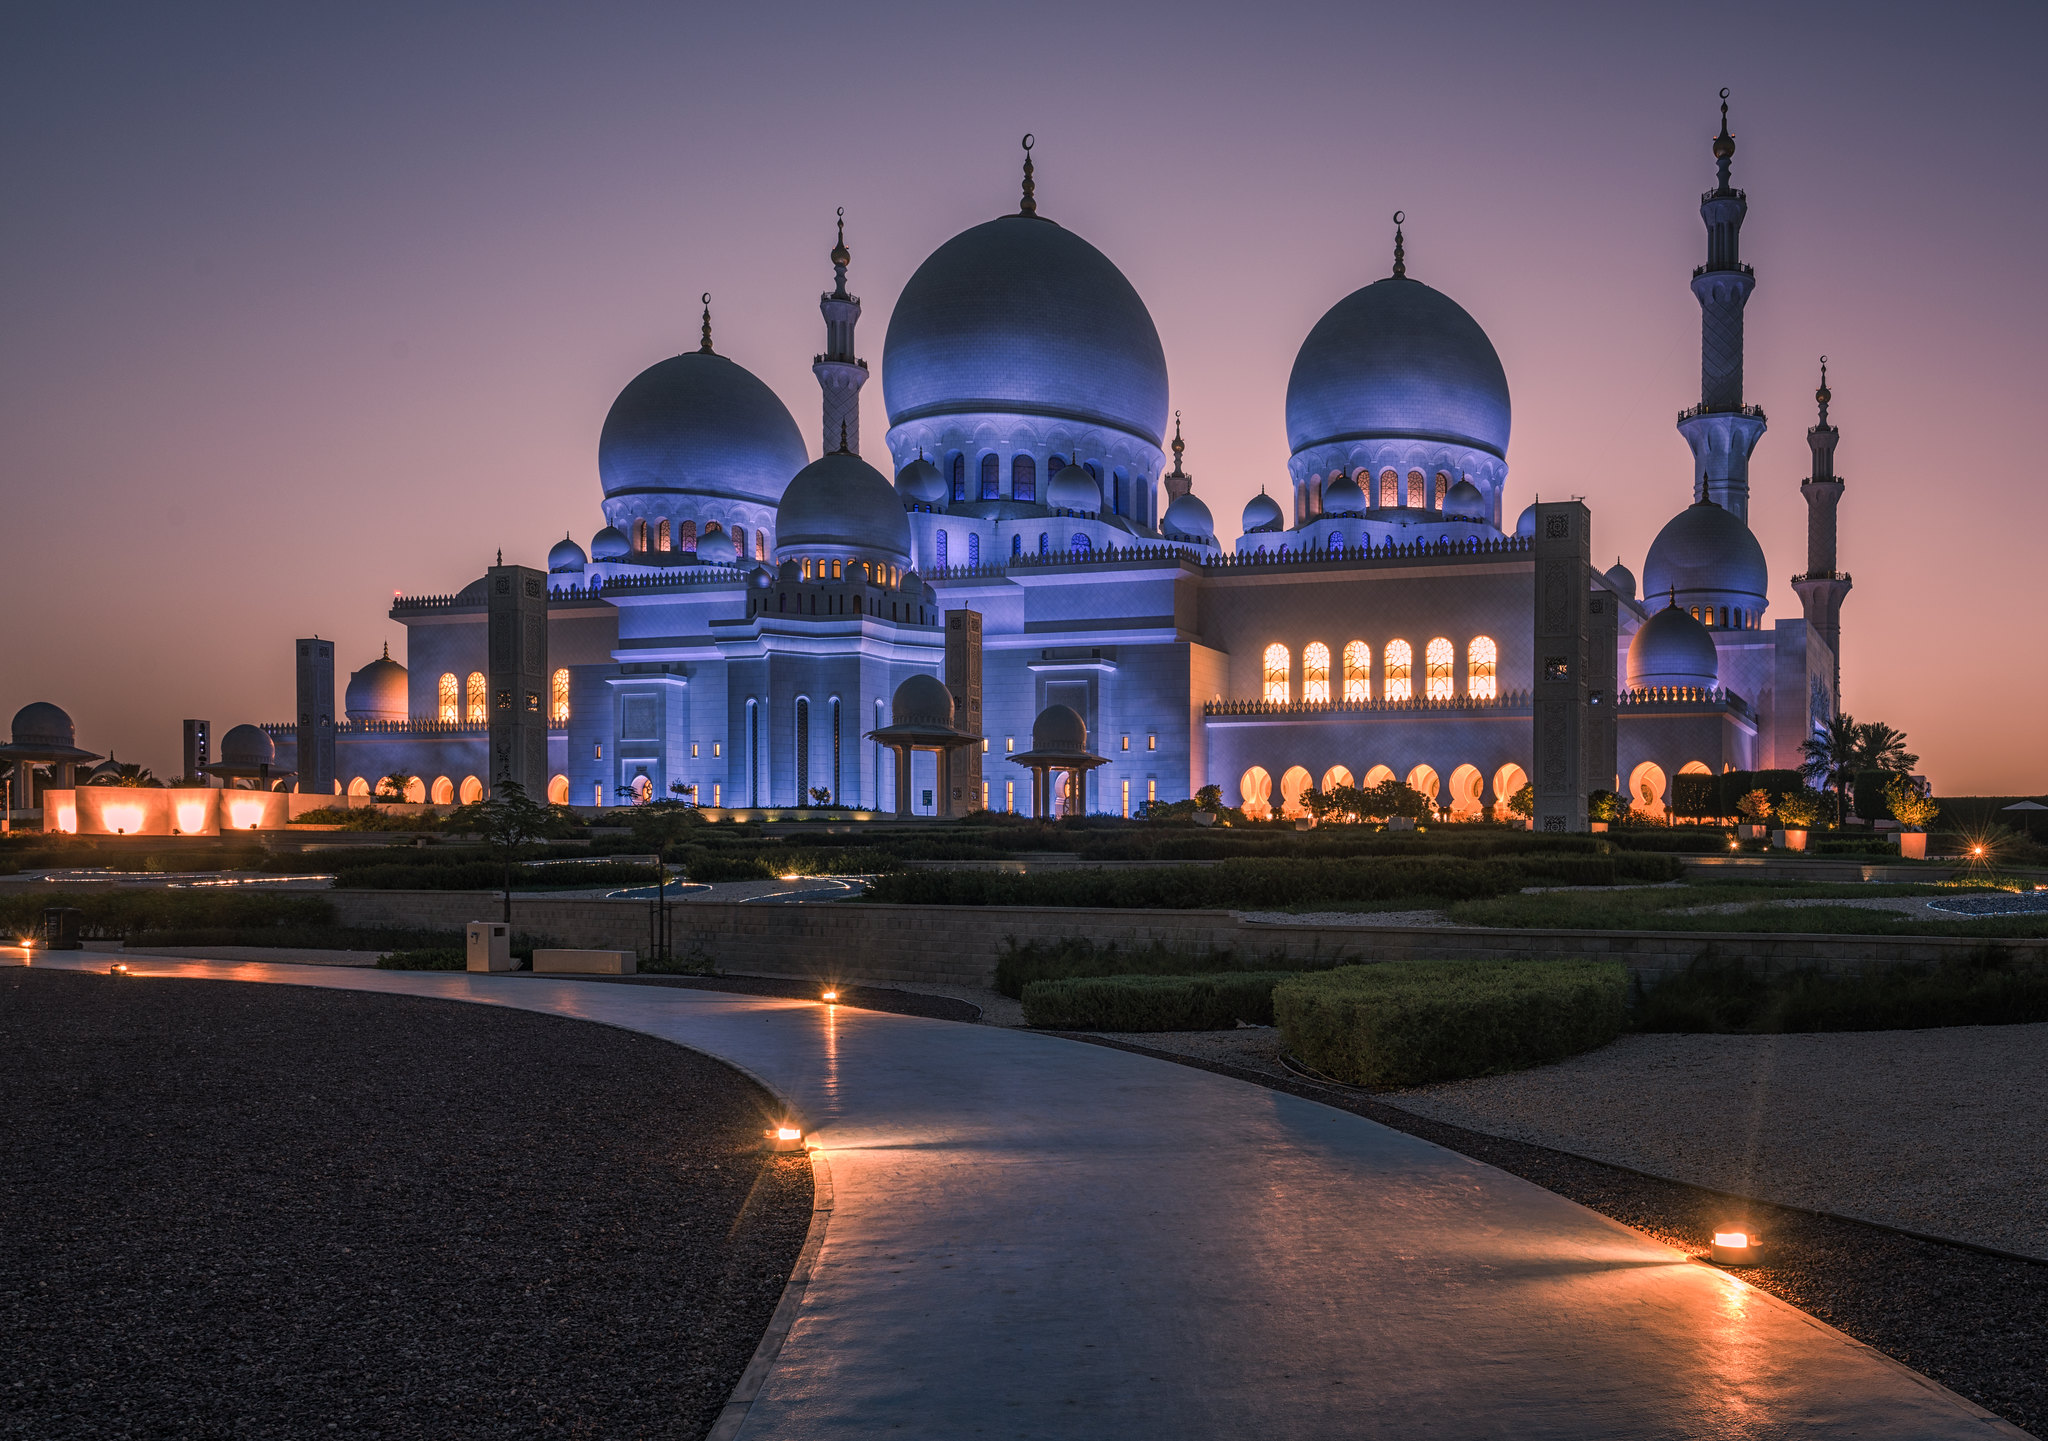 Wallpapers Dhabi Sheikh Zayed Grand Mosque - Abu Dhabi United Arab Emirates on the desktop